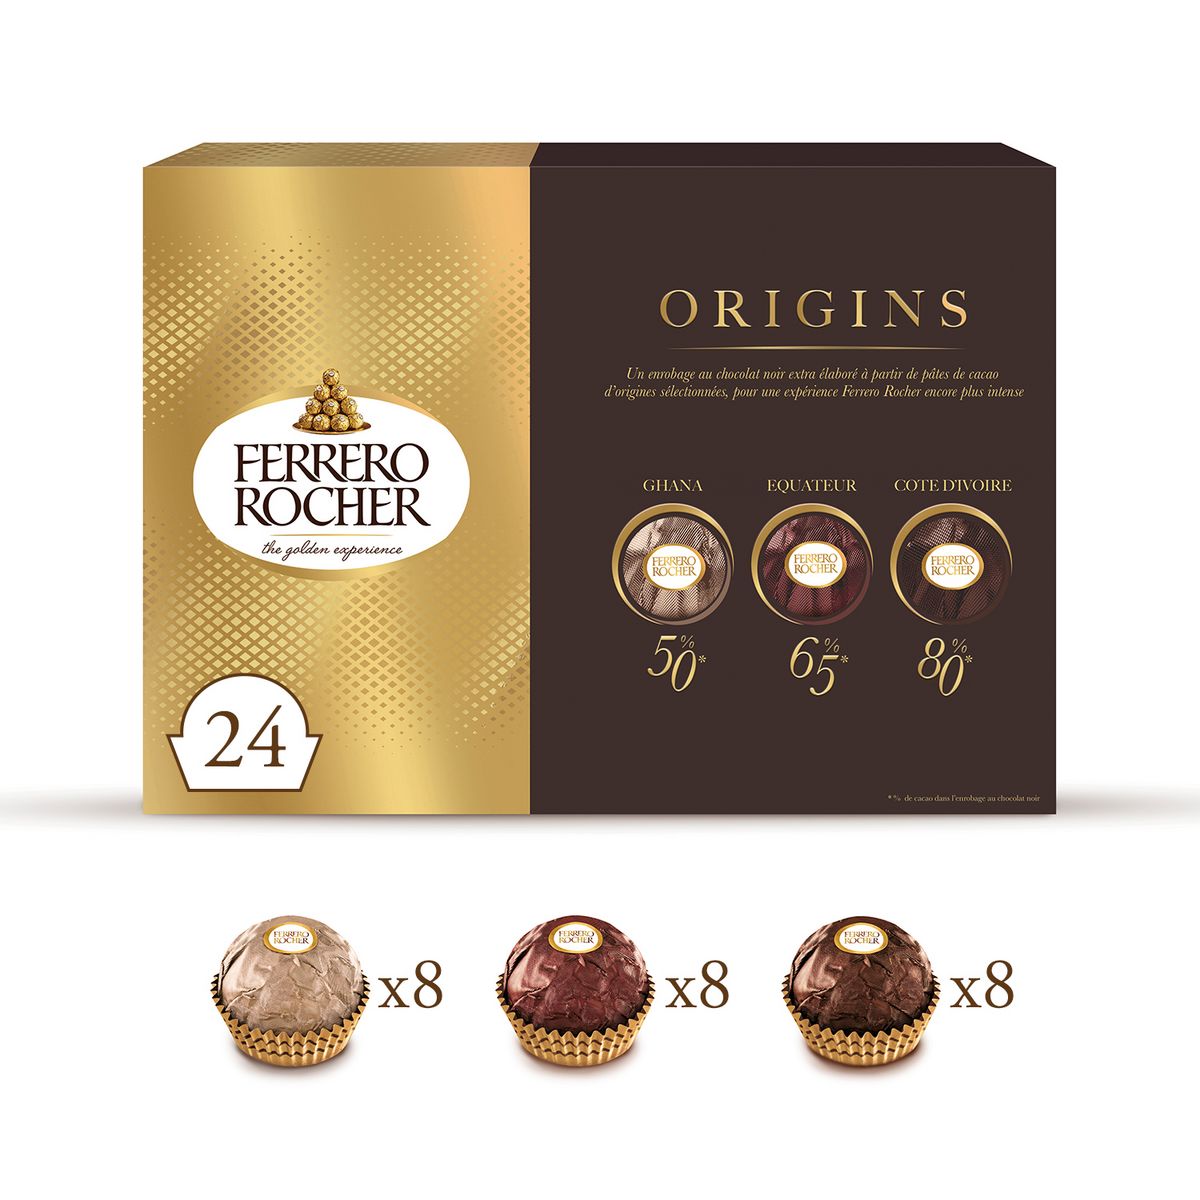 FERRERO Rocher Origins assortiment de chocolats 24 pièces 300g